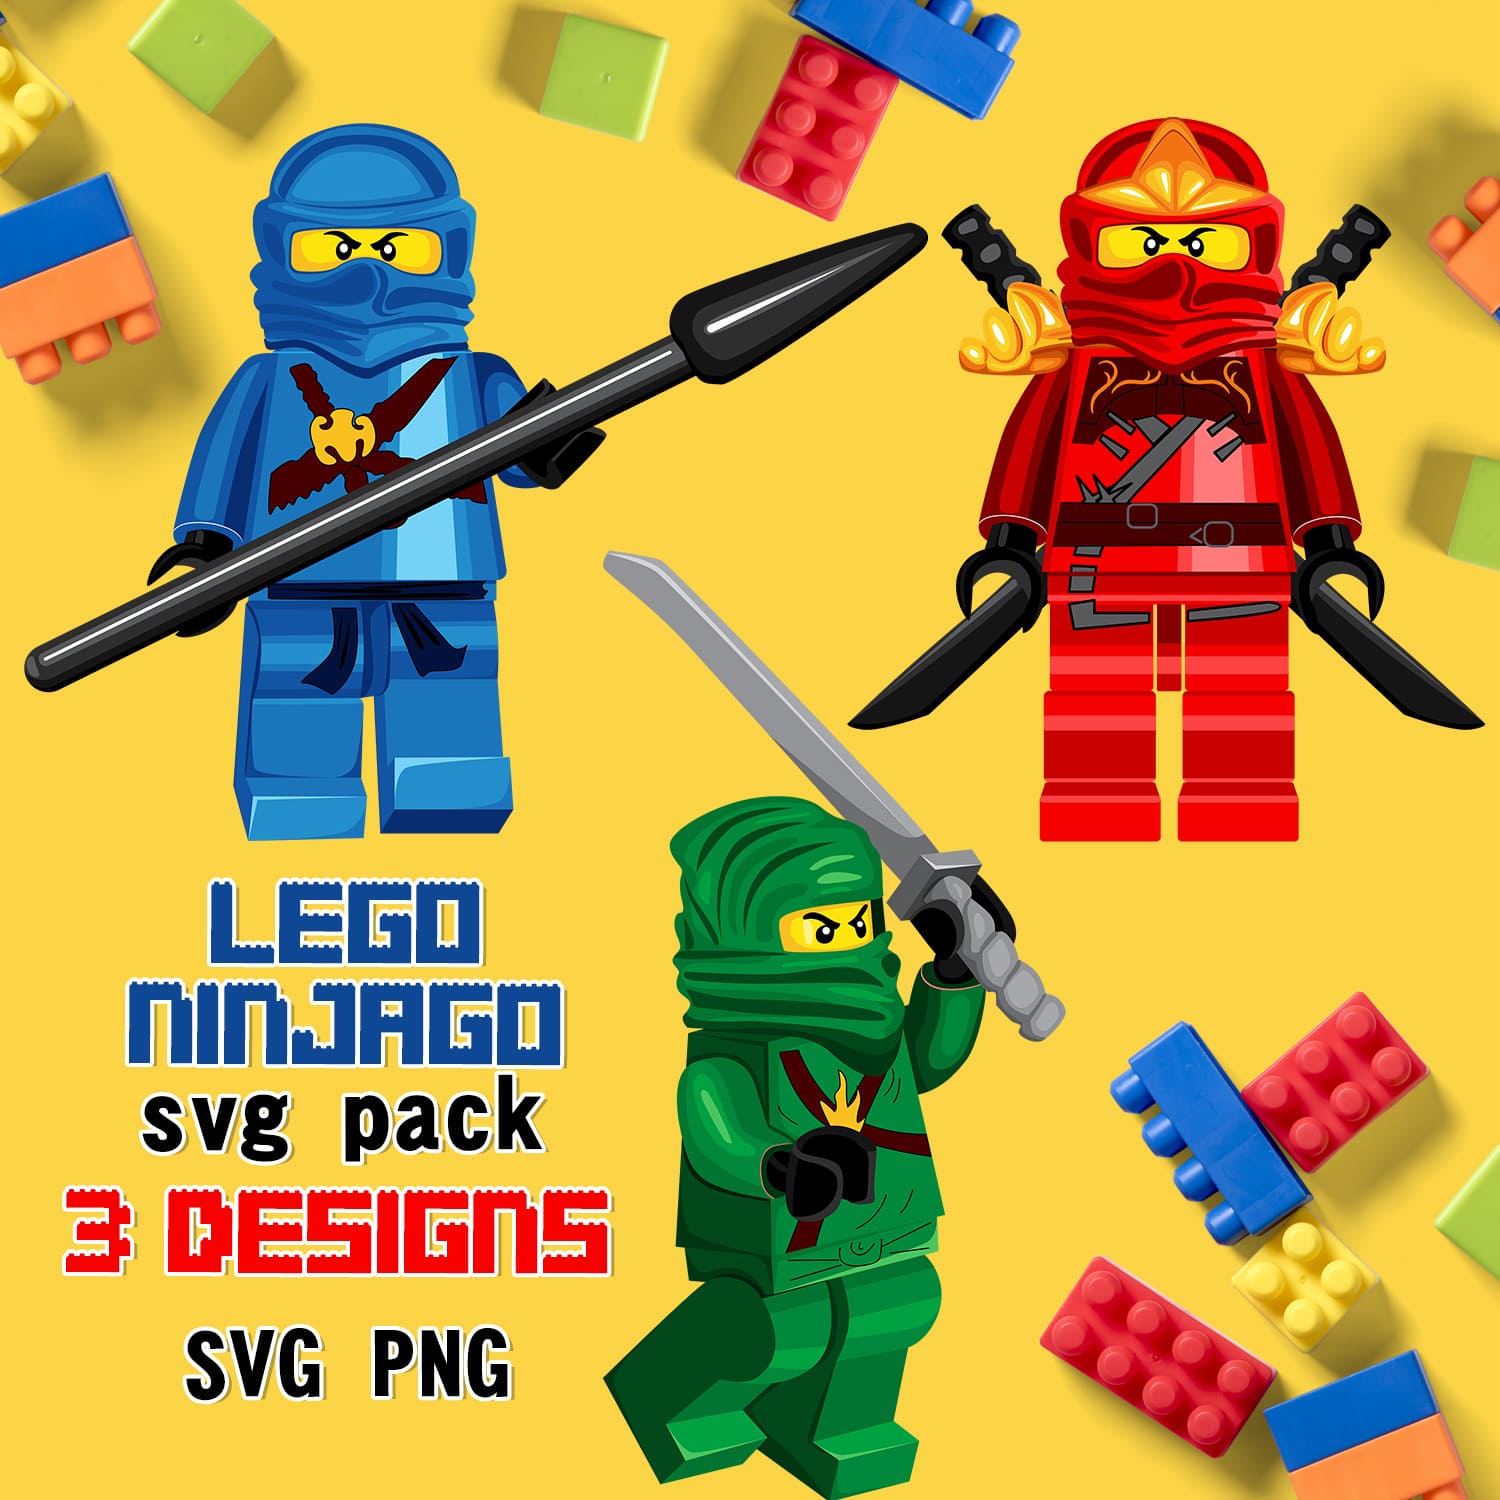 Lego Ninjago SVG T-shirt Designs Bundle - main image preview.